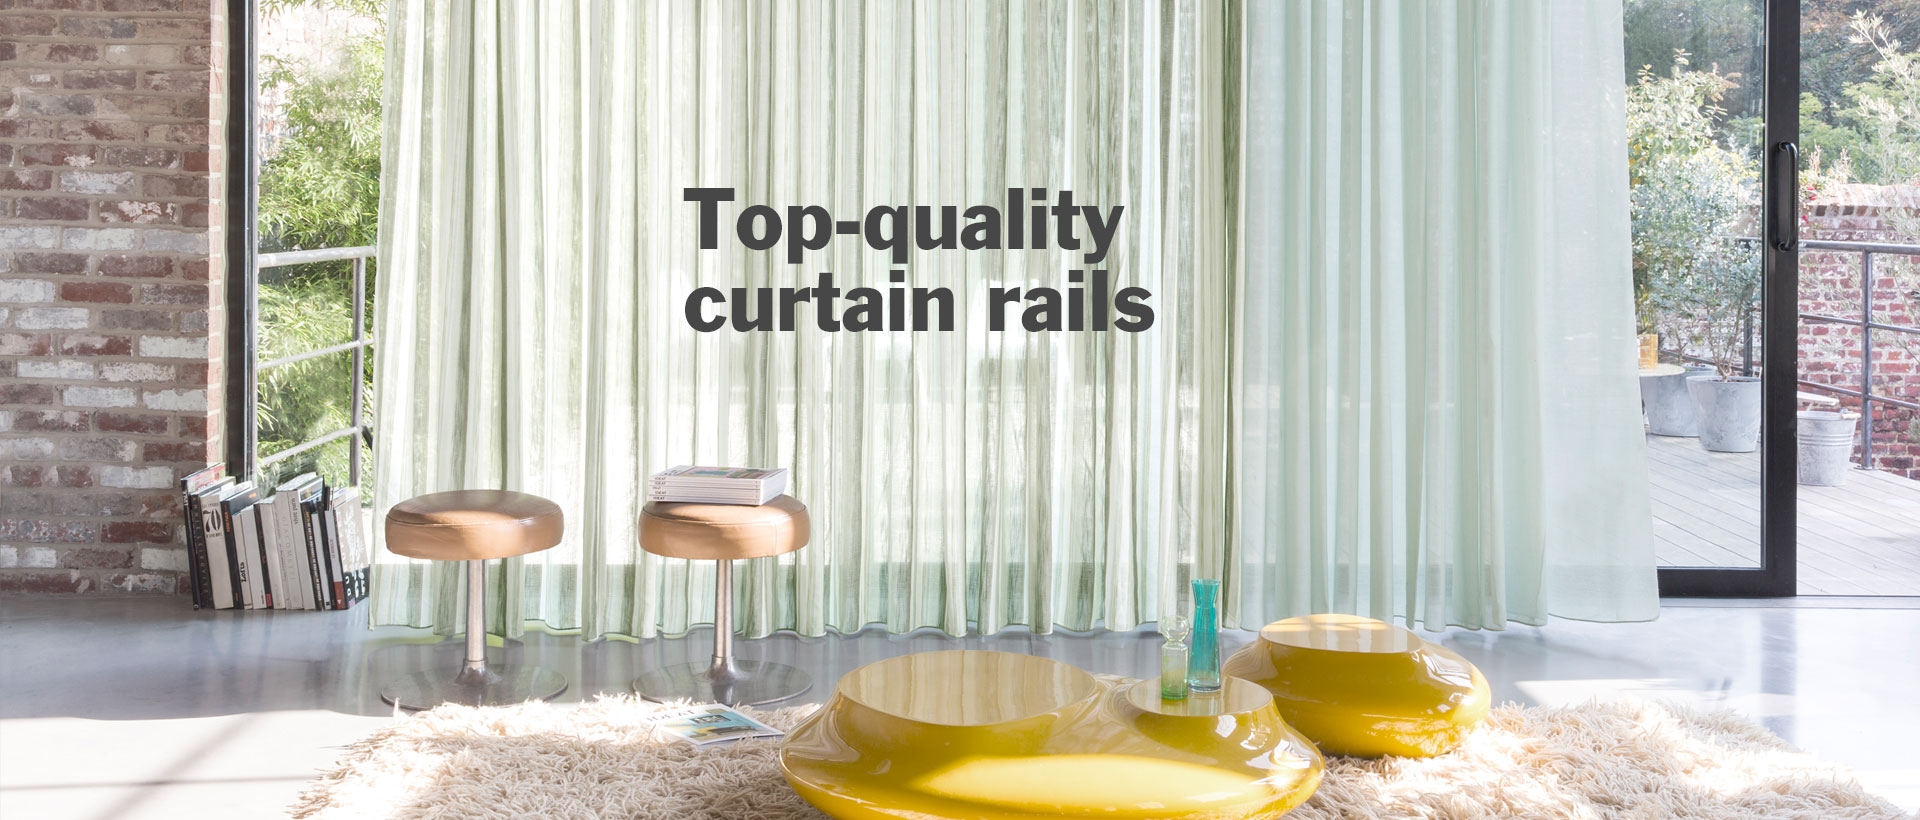 Top quality curtain rails